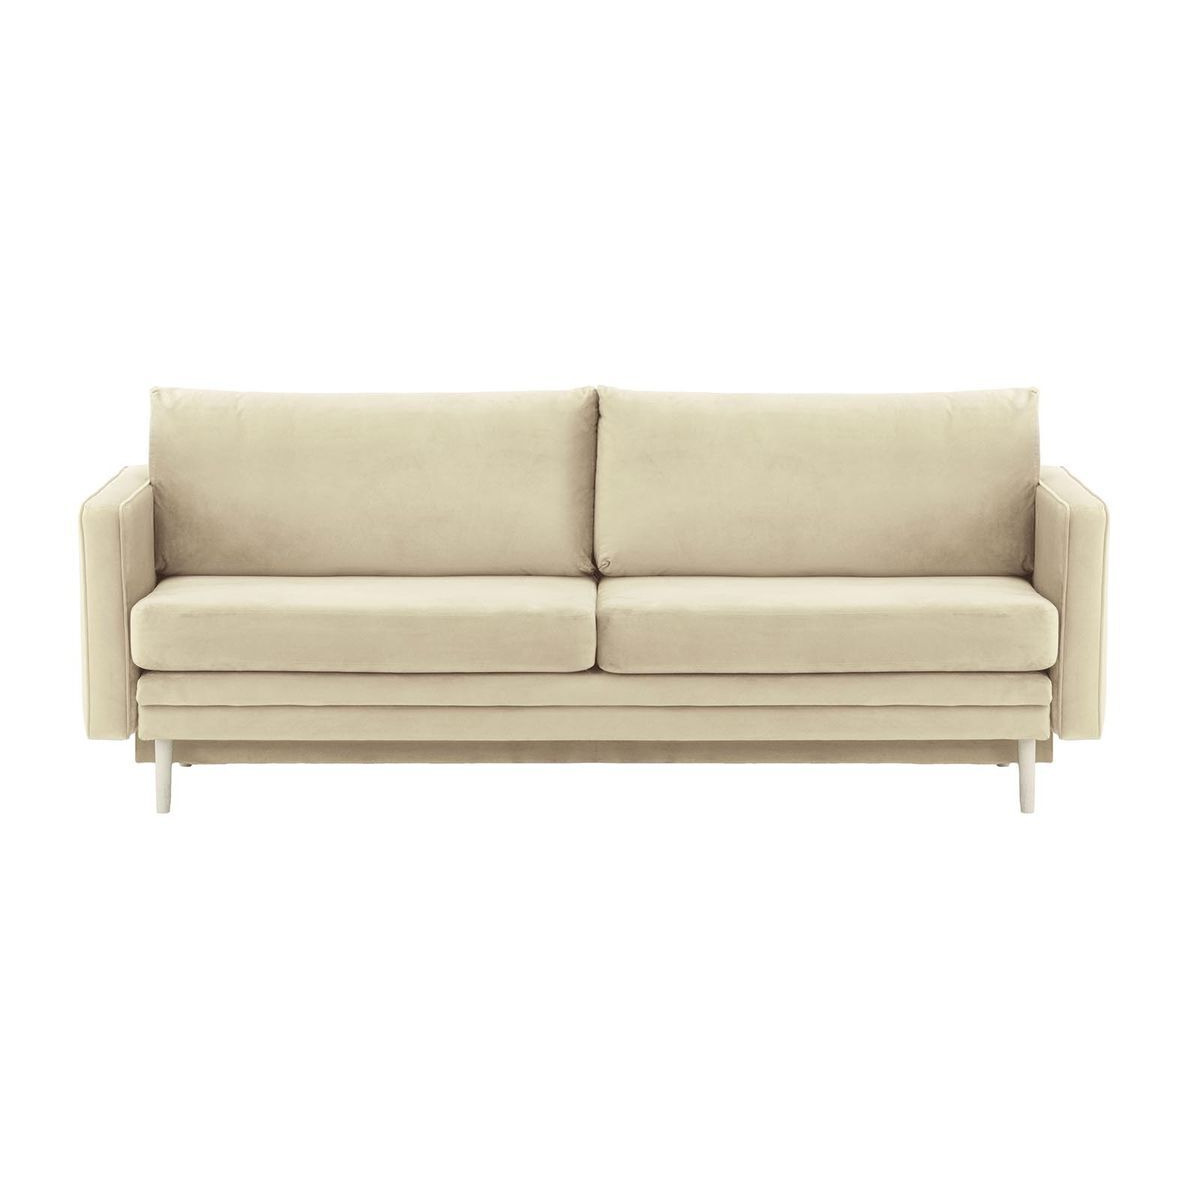 Lioni Sofa Bed with Storage, light beige, Leg colour: white - image 1